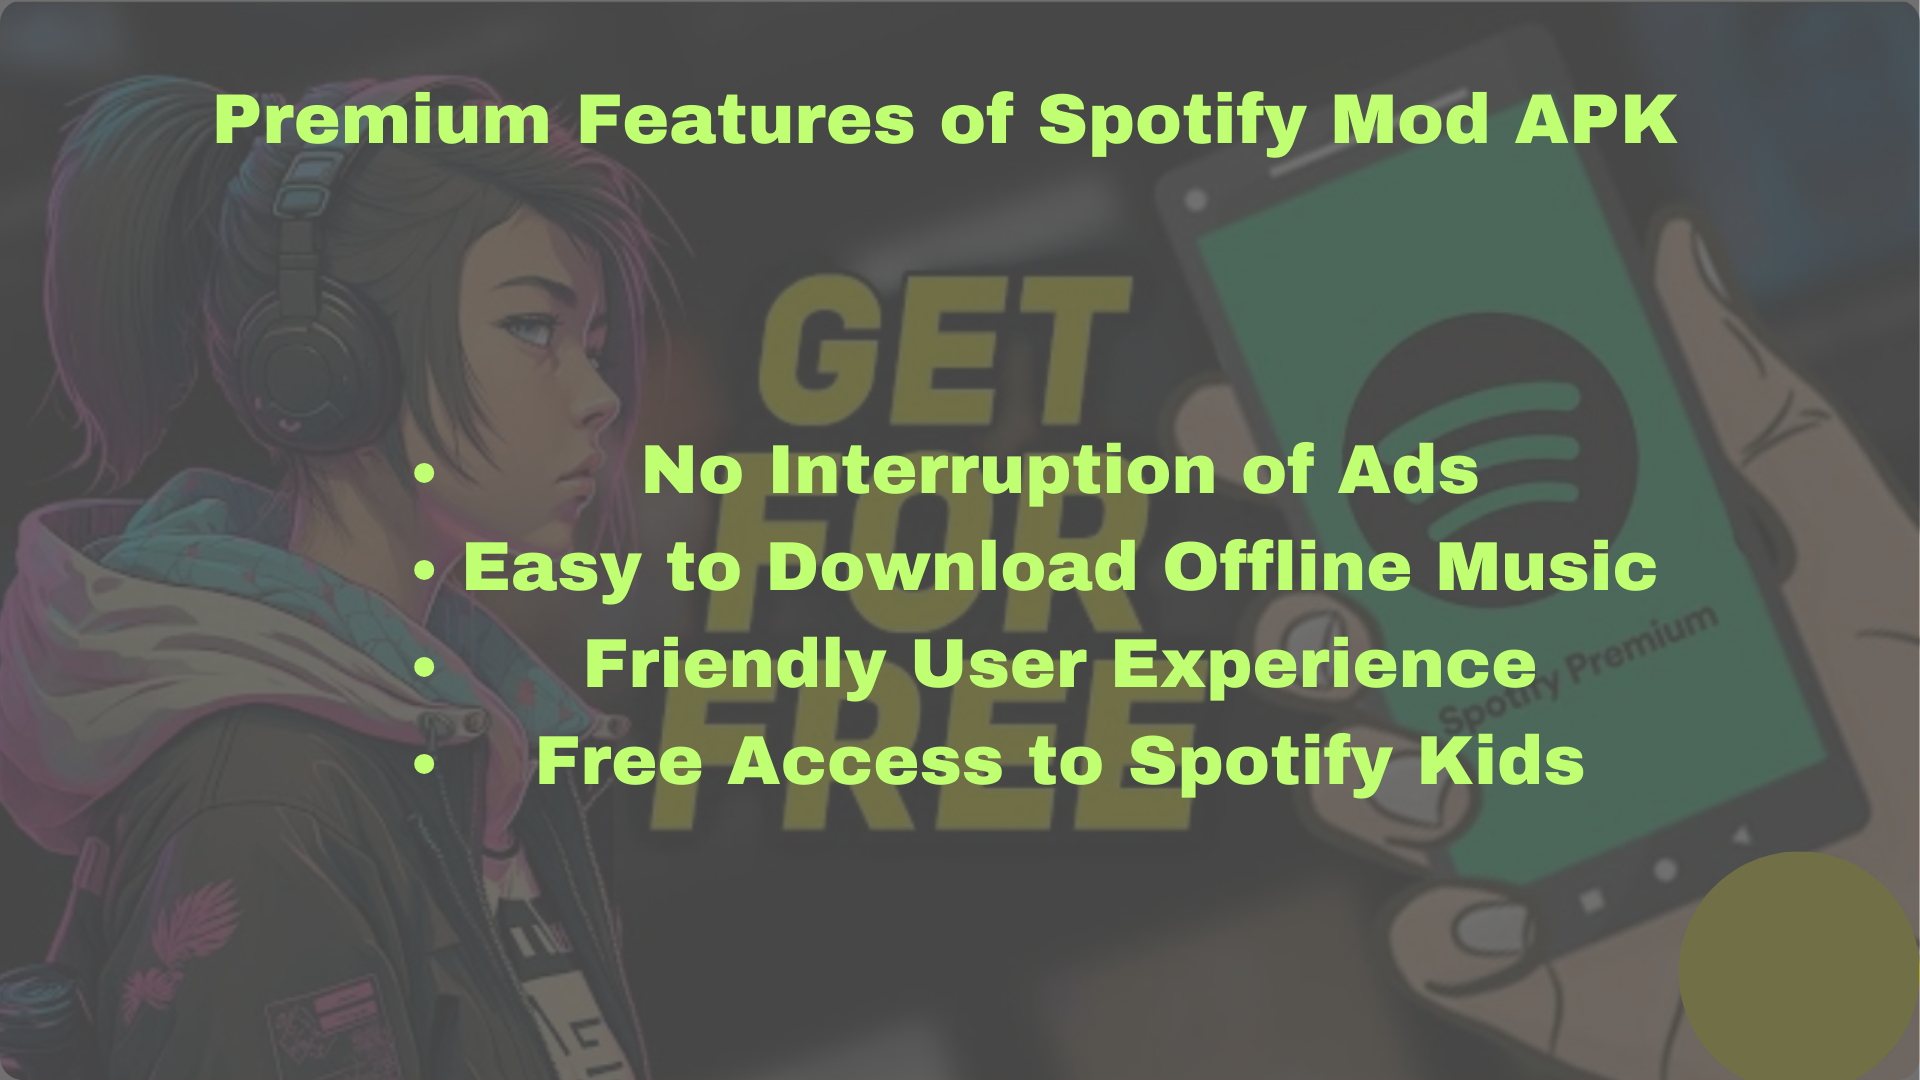  Download Spotify Mod Apk 8.9.24.633 Old Version
Premium Features